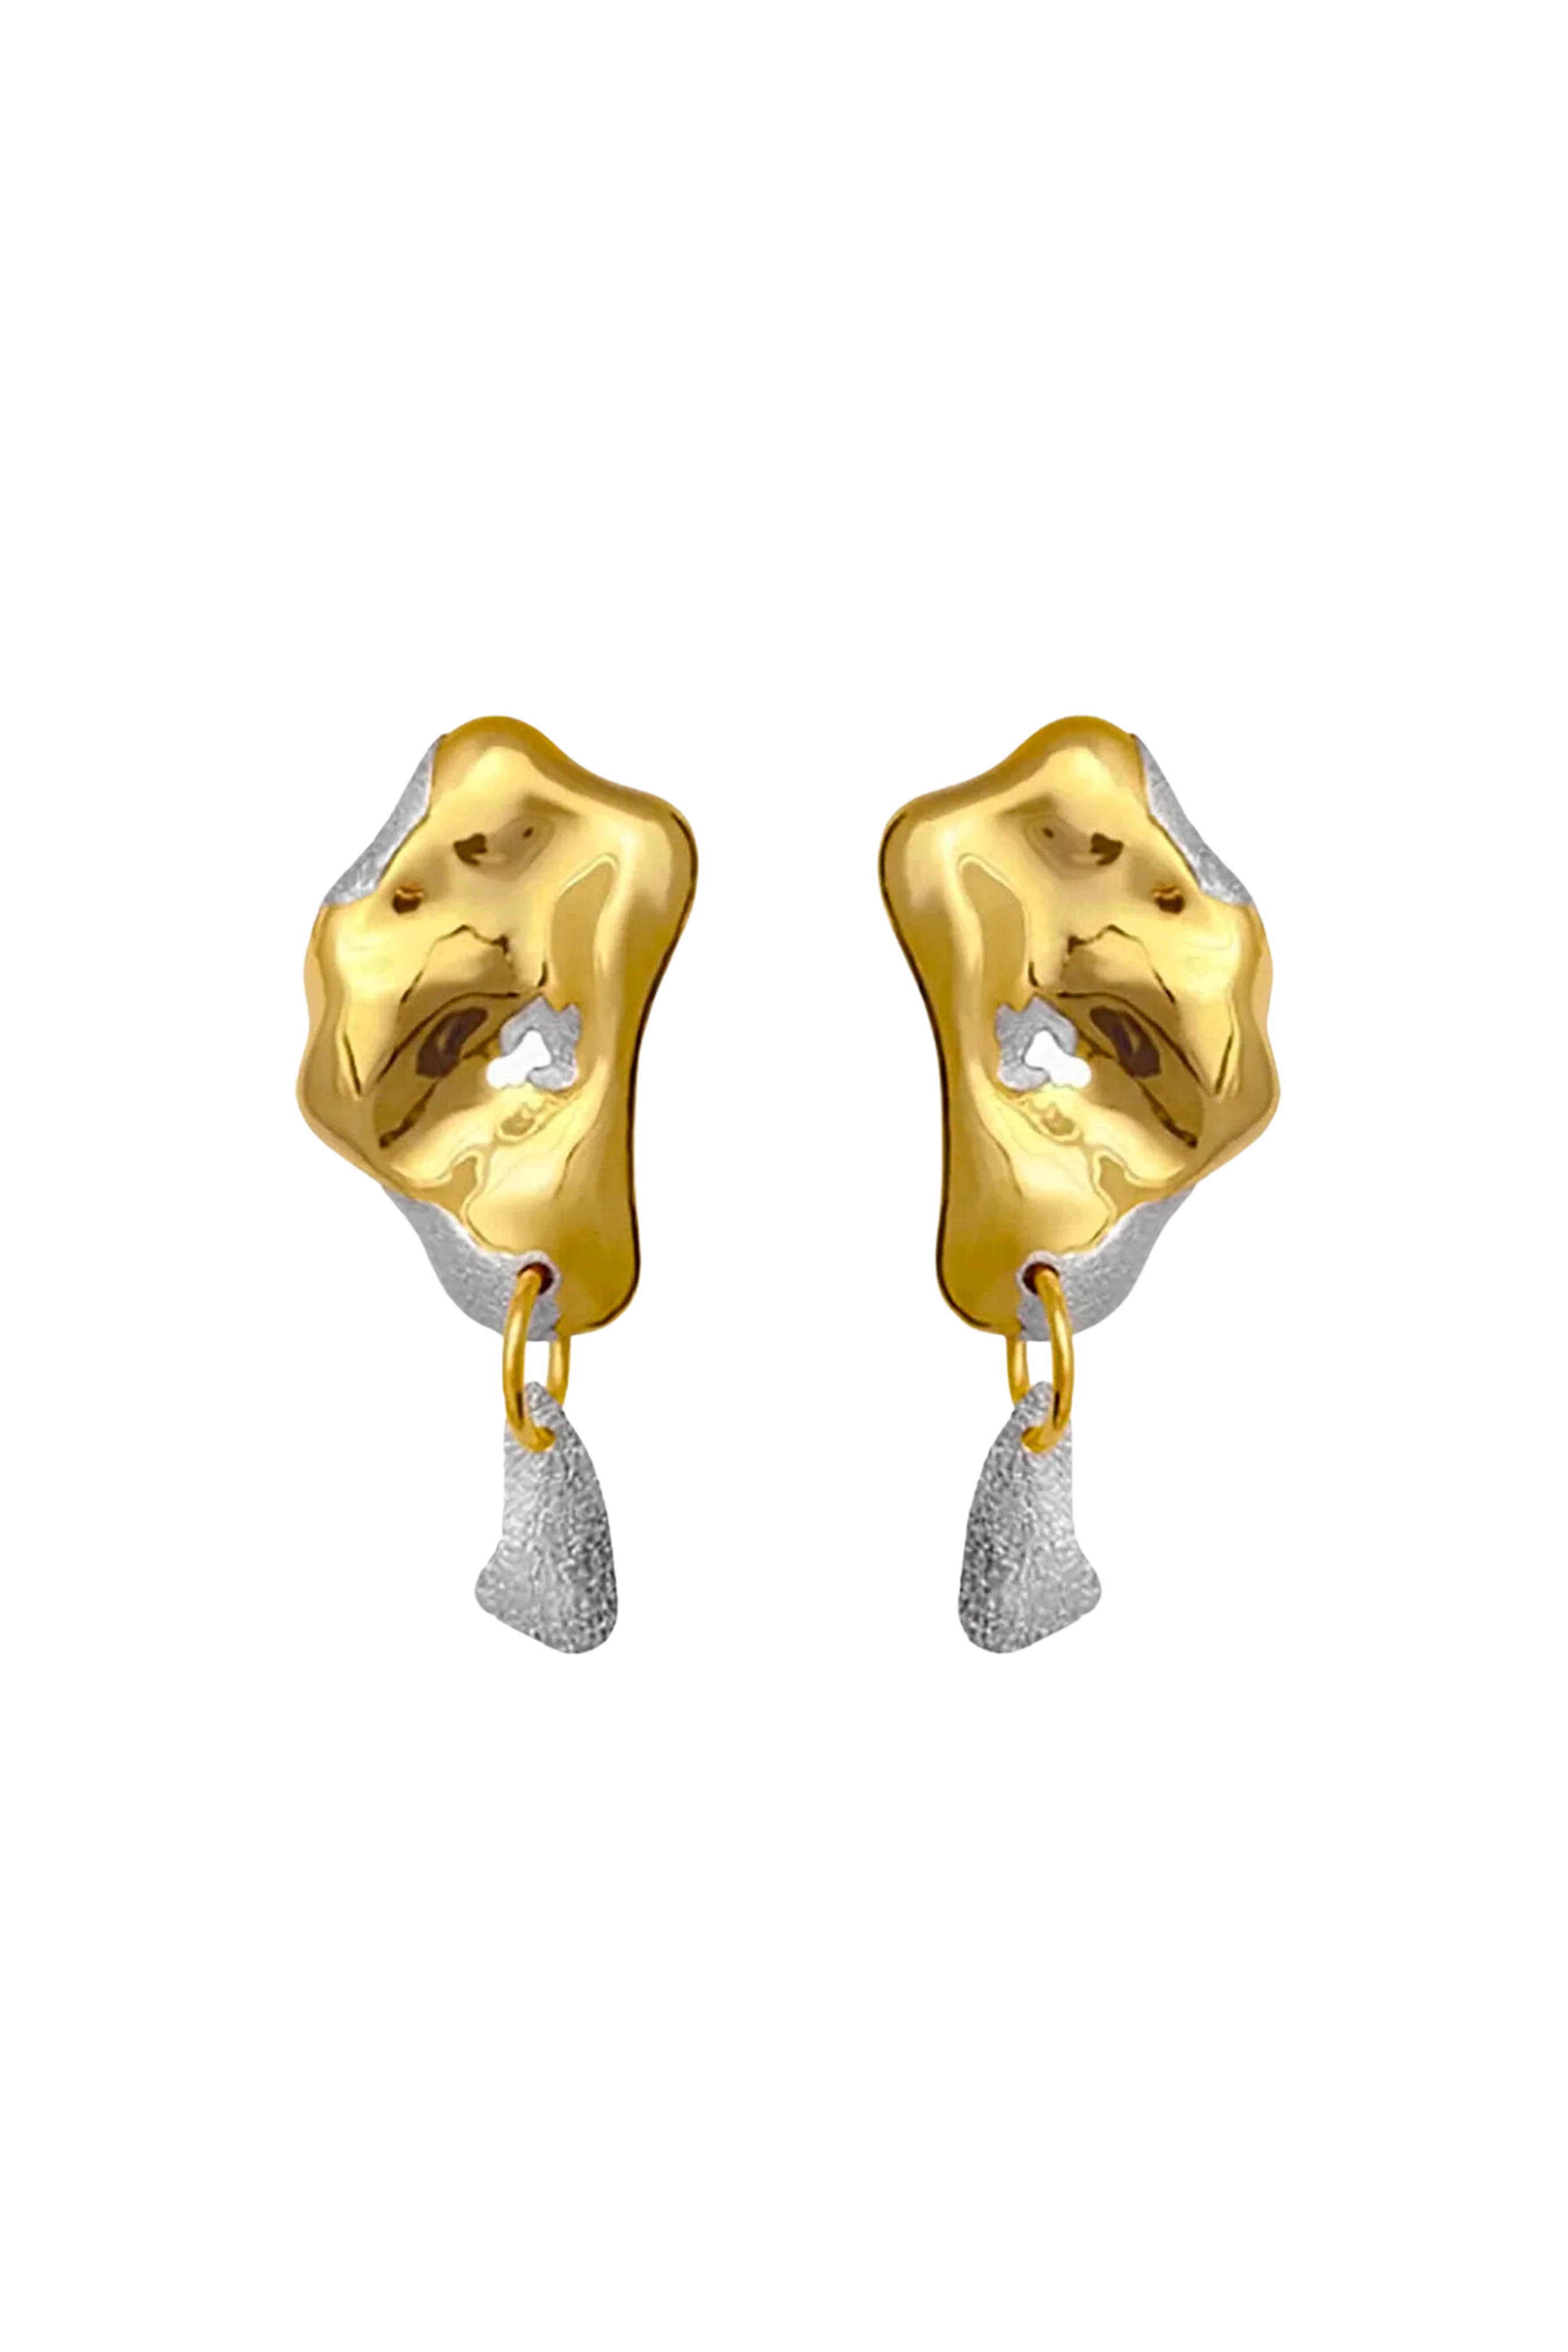 SORDO Profundo Gold Earrings